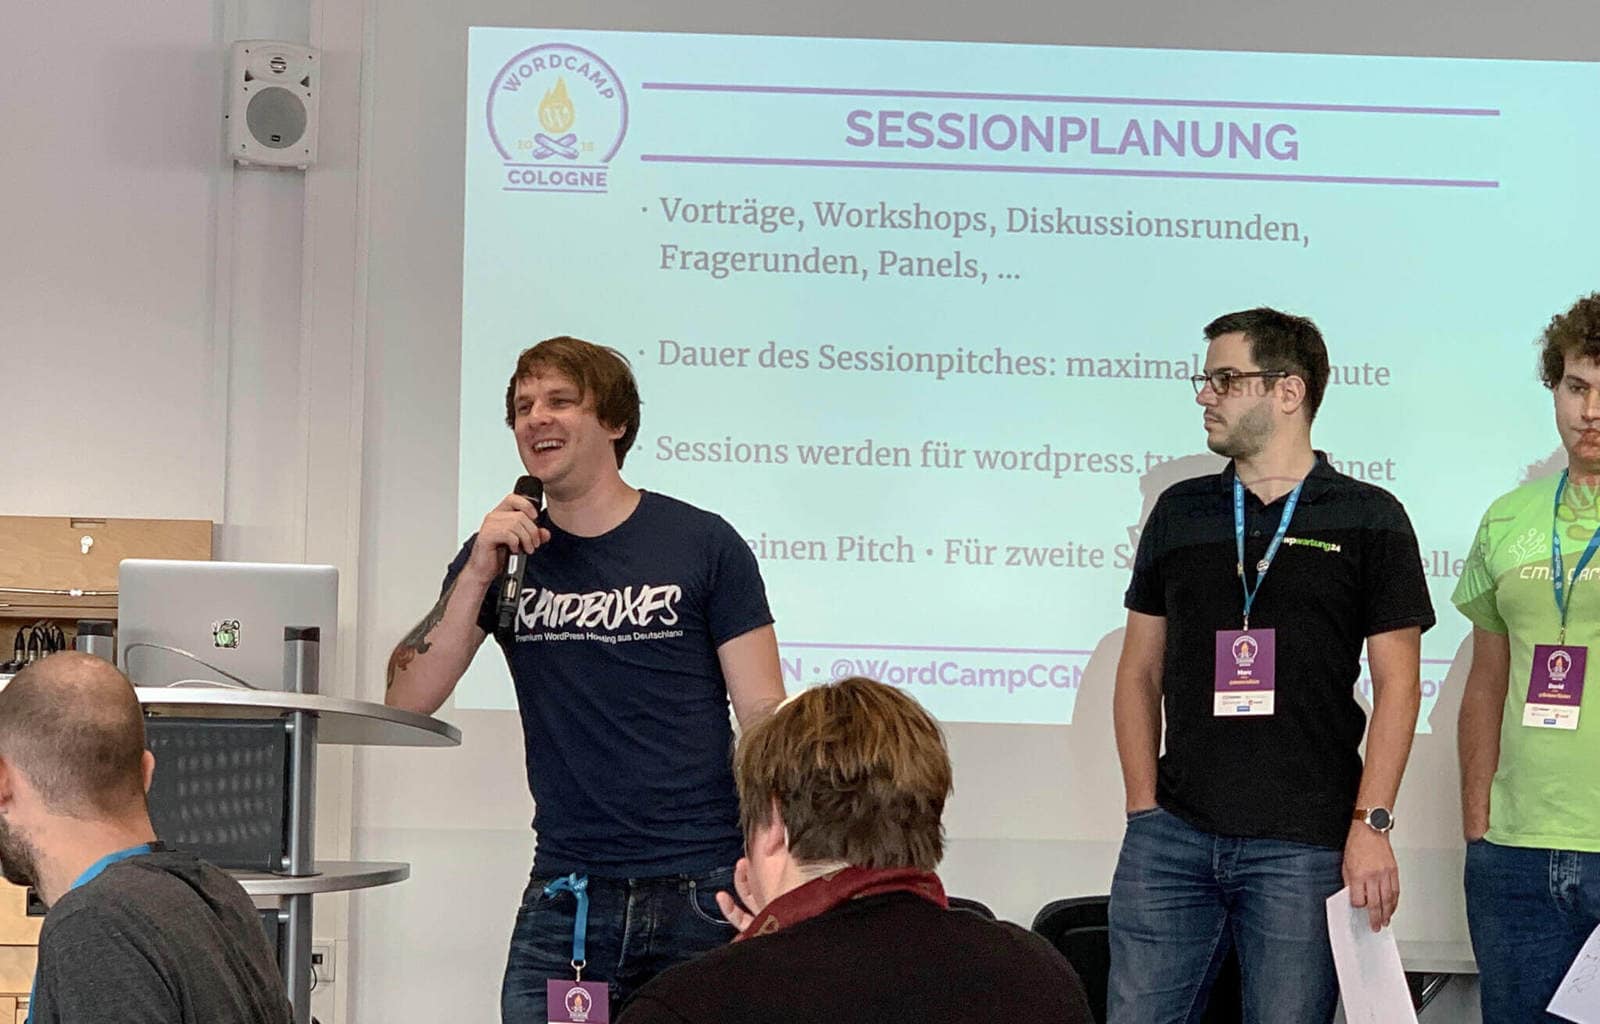 WordCamp Cologne: Matthias von Raidboxes bij de sessie pitch